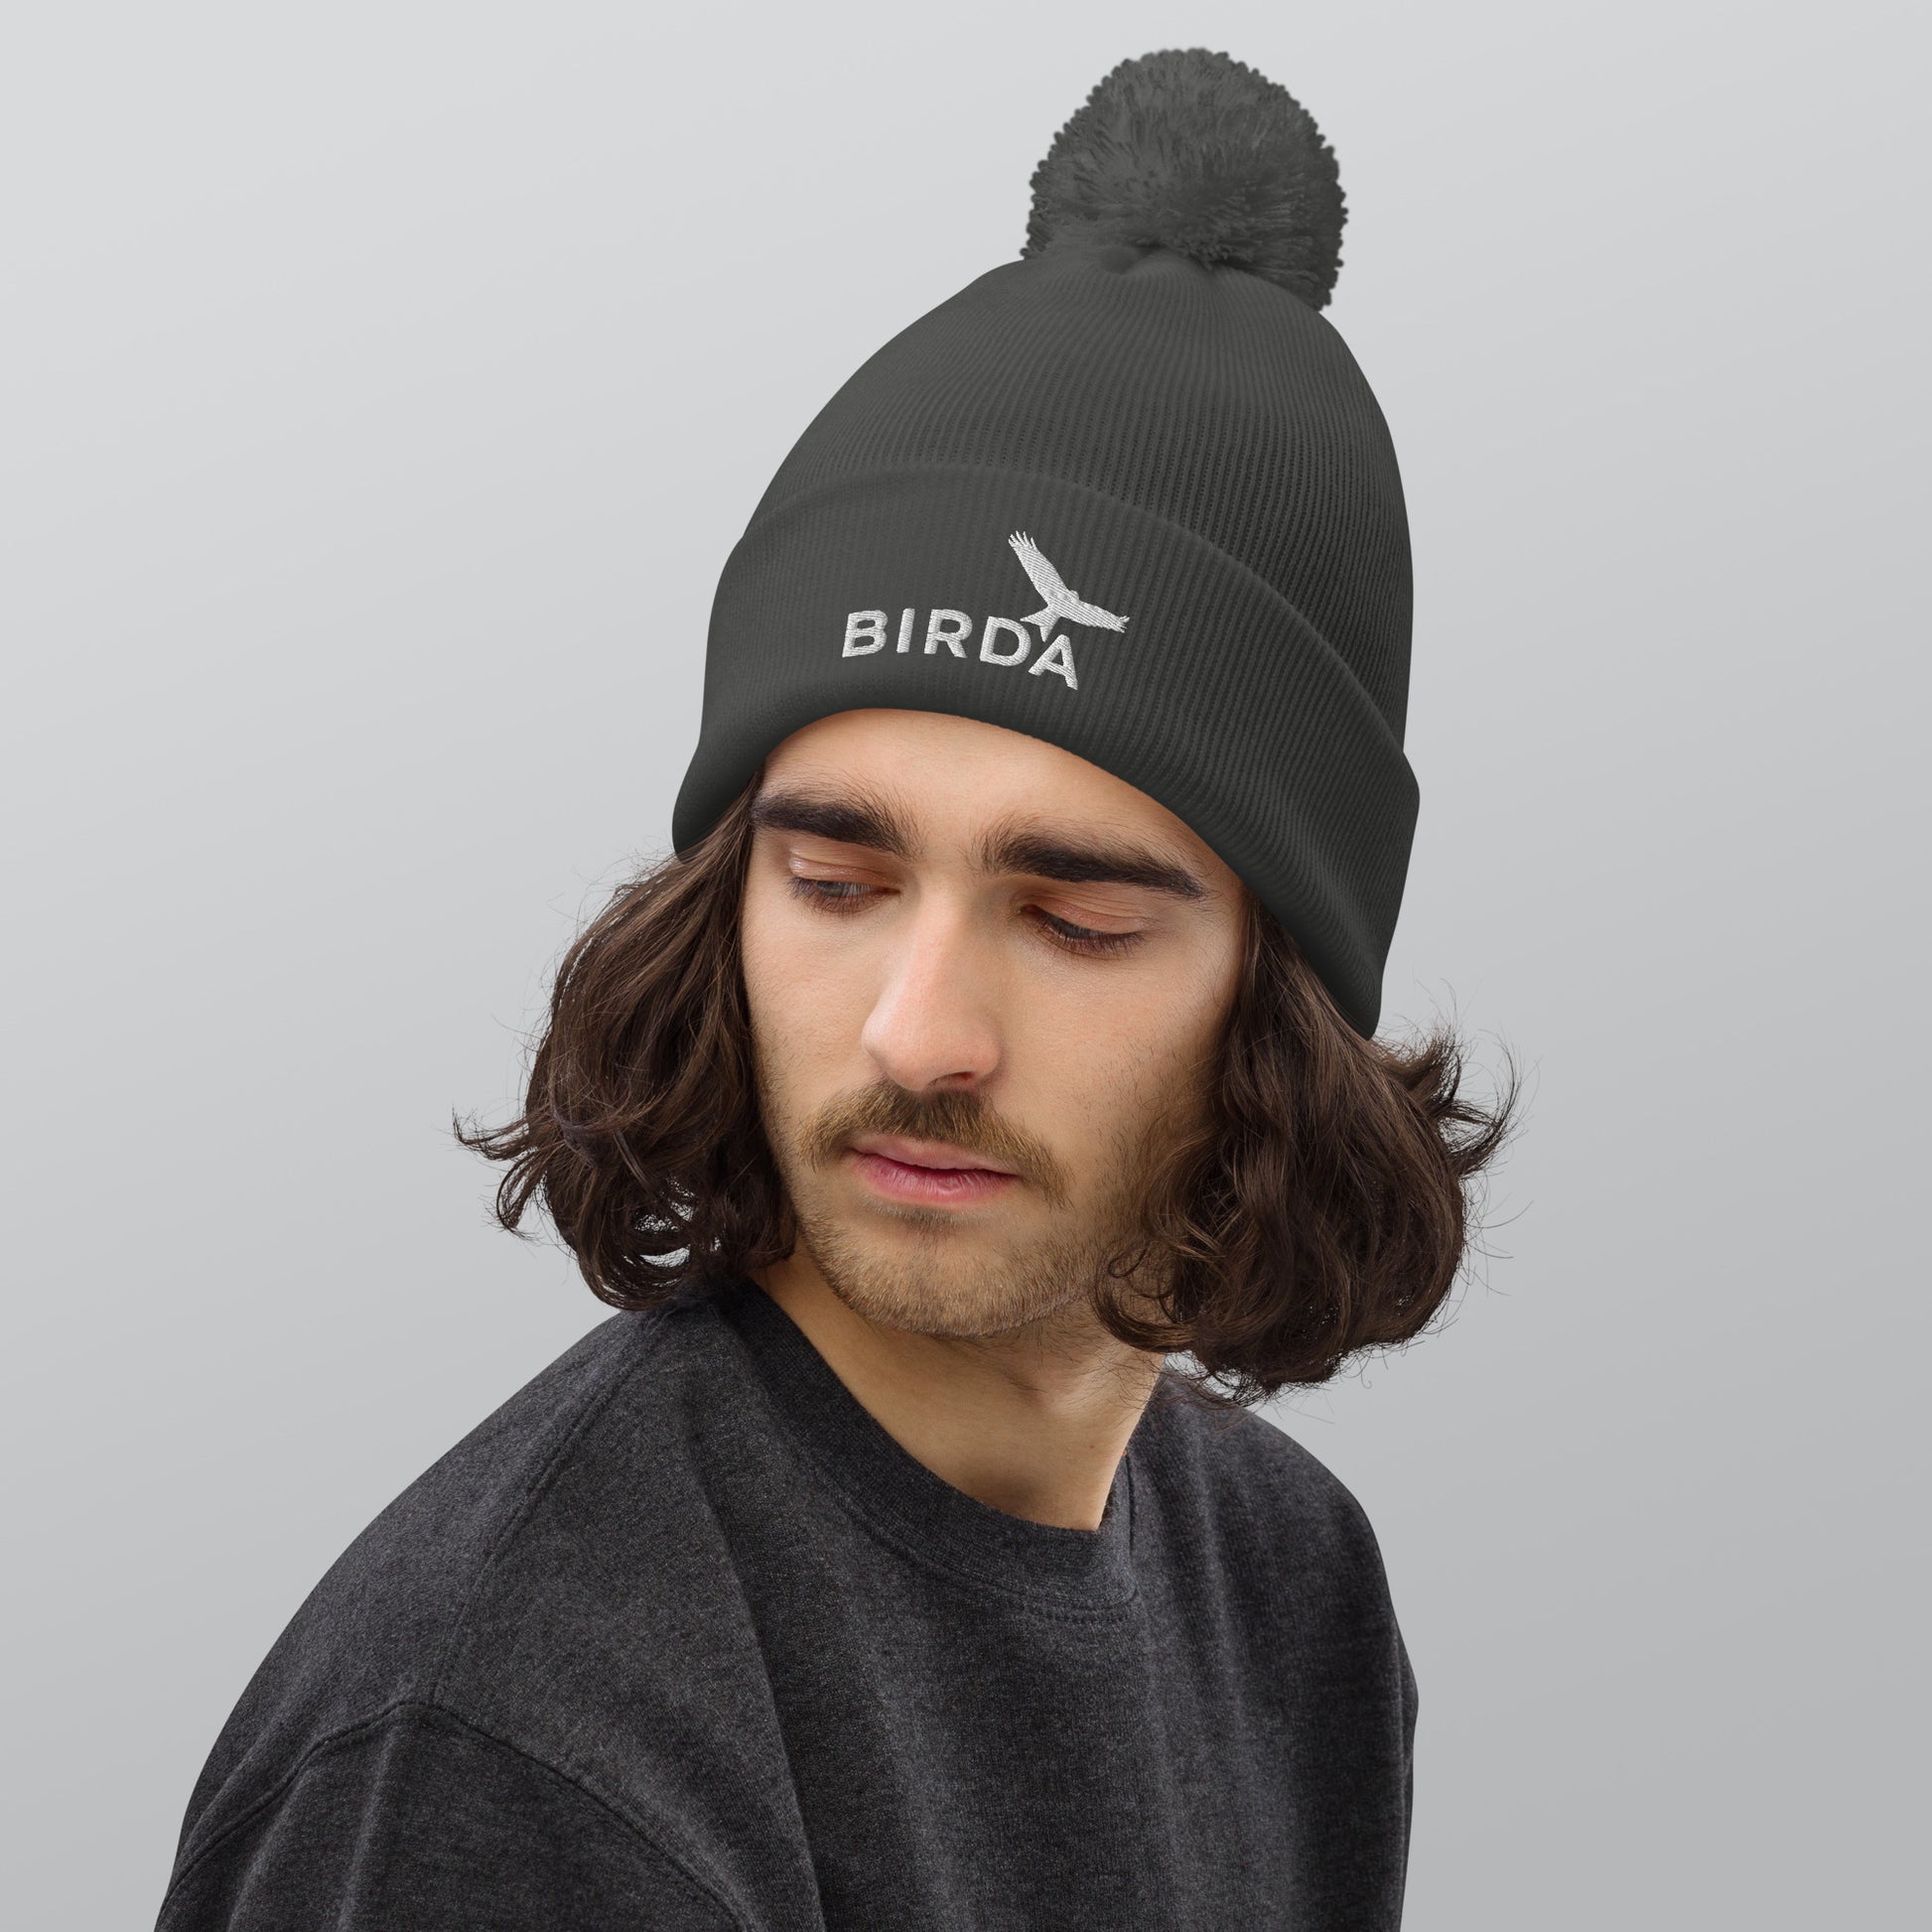 Birda Bird Cuffed Pom-Pom beanie in graphite grey on a man